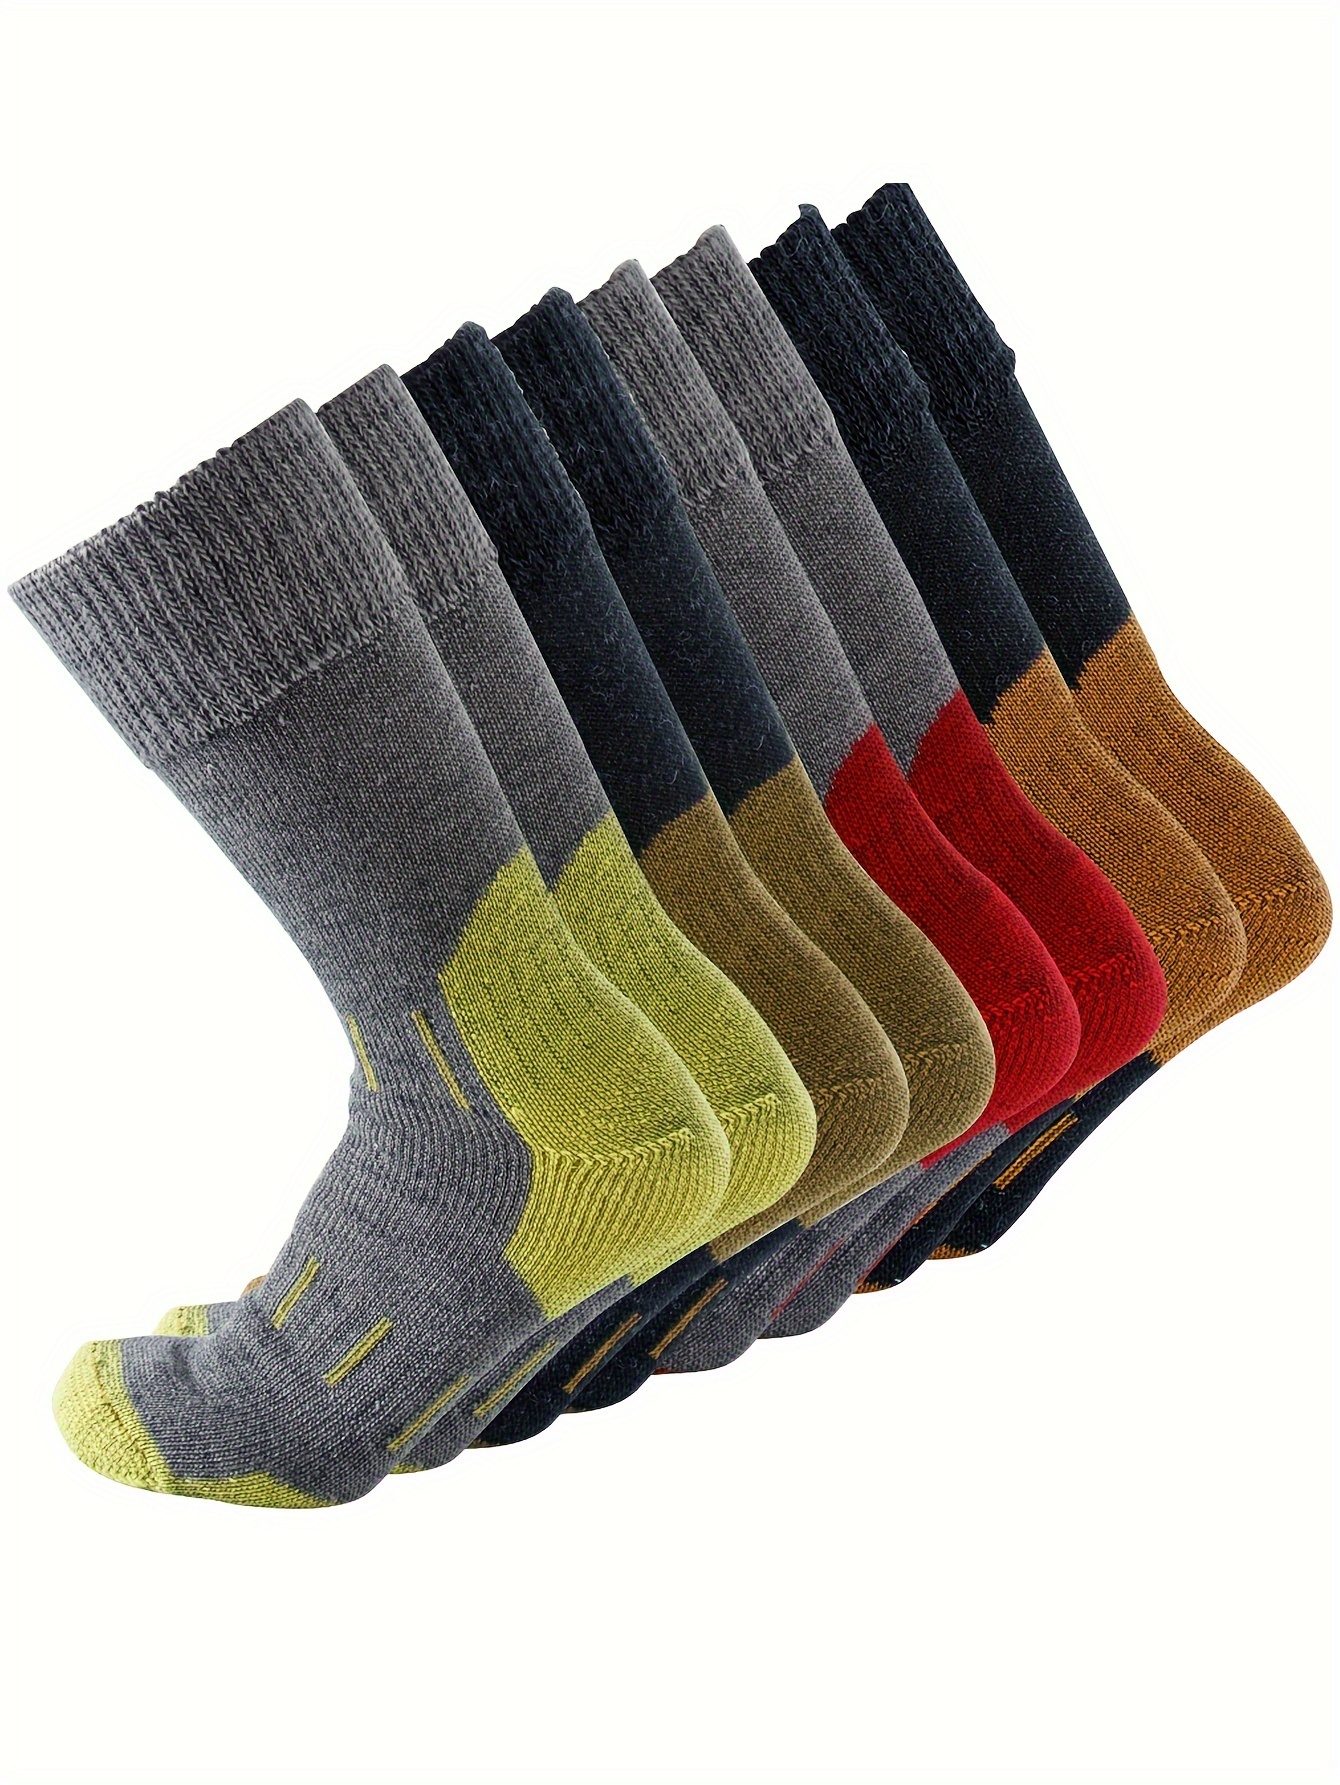  Merino Wool Hiking Socks for Men n Women - 3 Pairs : Clothing,  Shoes & Jewelry